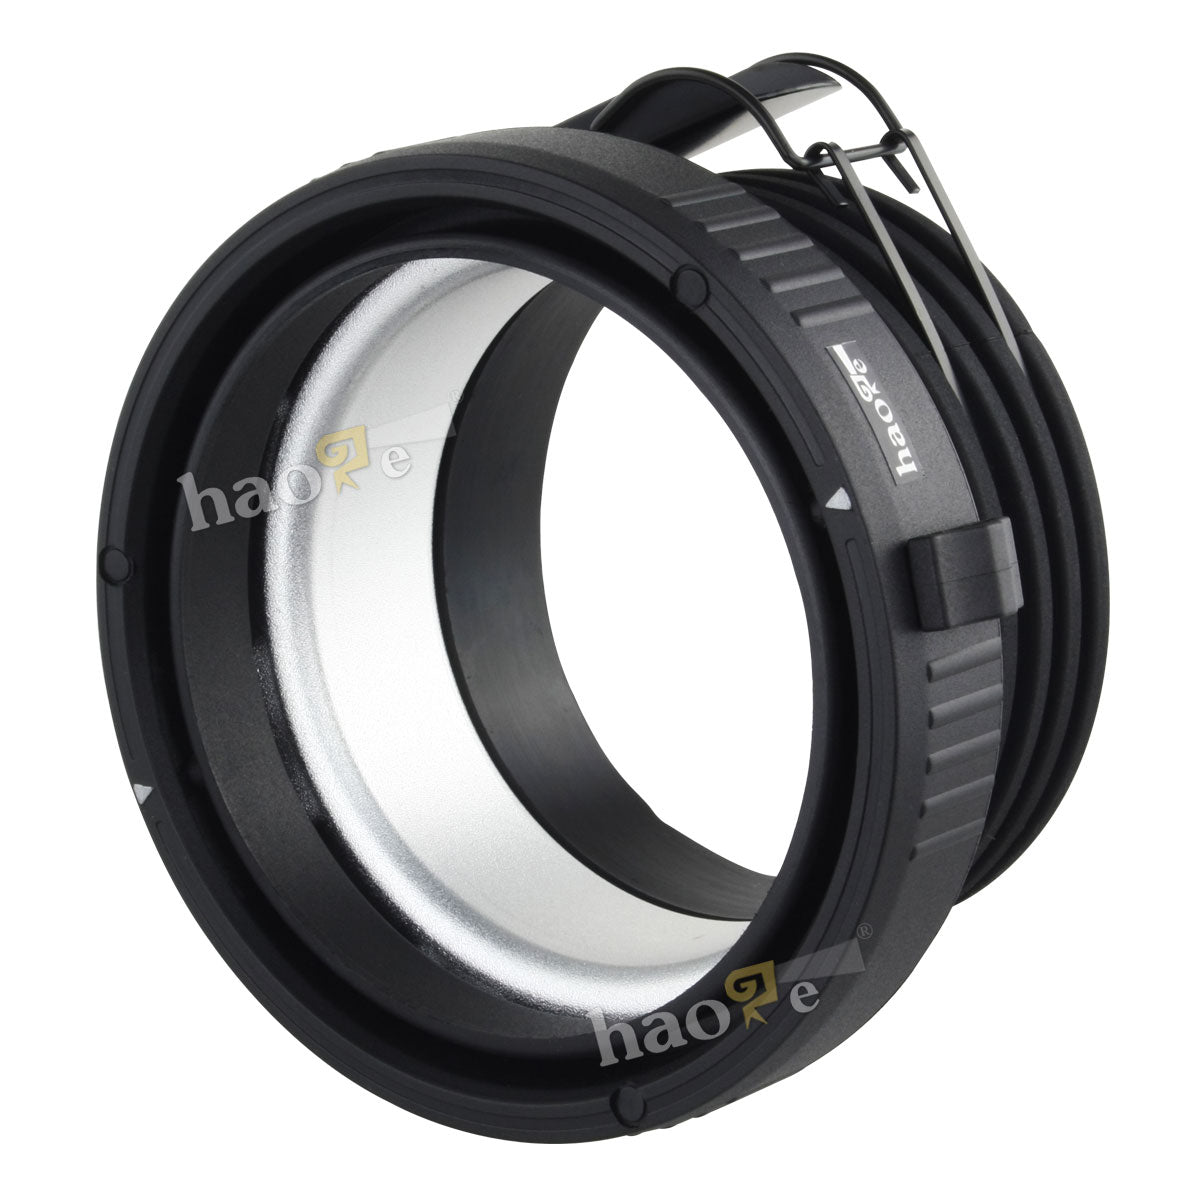 Haoge Profoto to Elinchrom Mount Speedring Ring Adapter Converter for Studio Light Strobe Flash Monolight